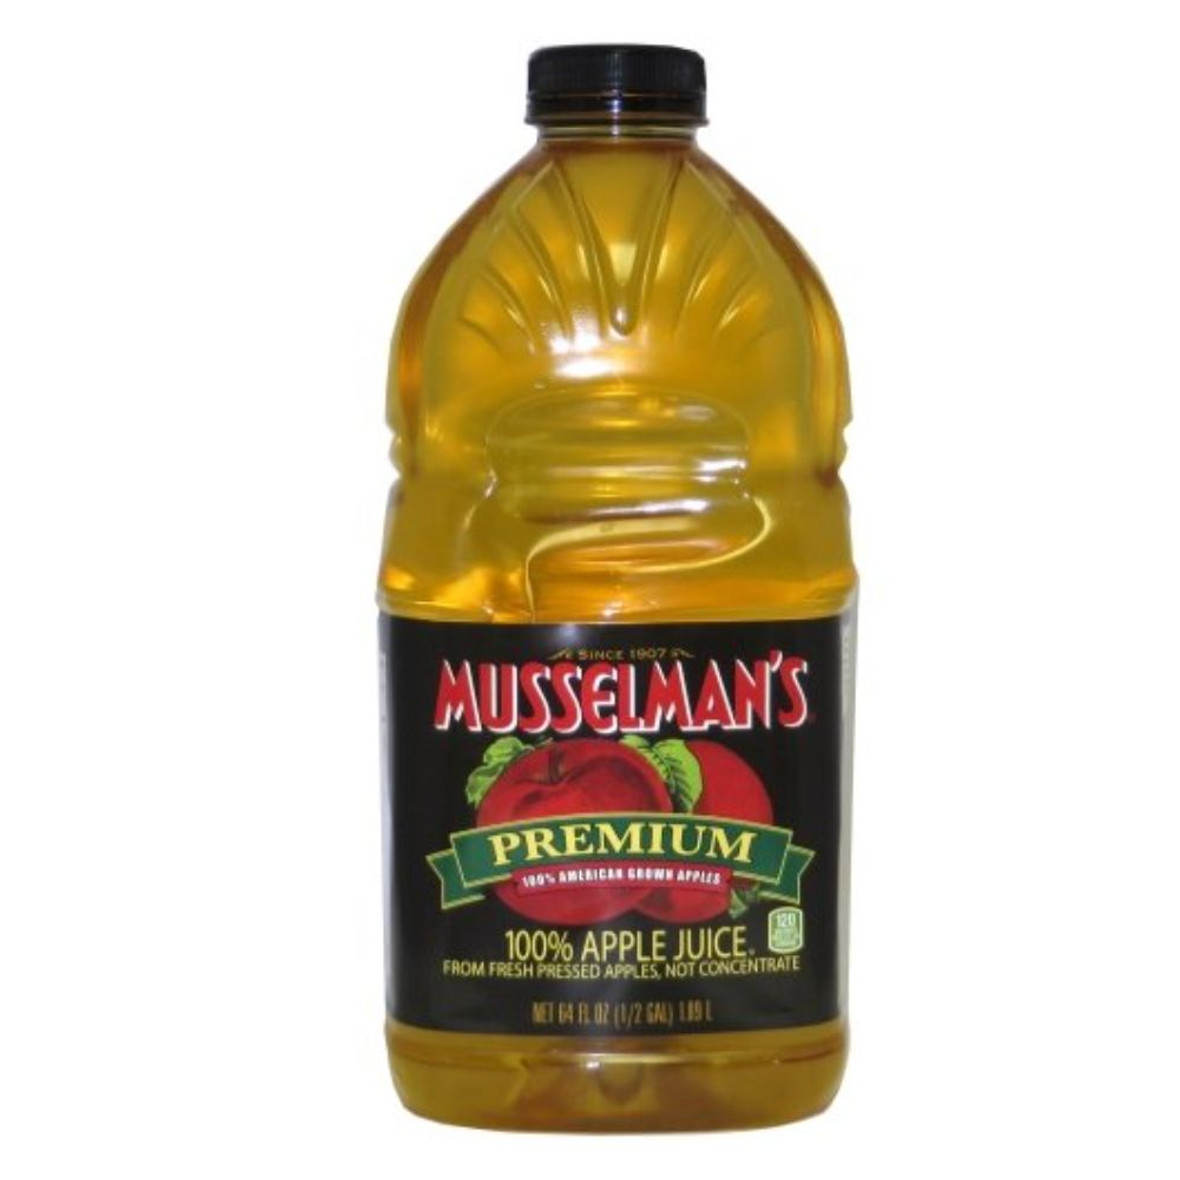 Musselman's Premium 100% Apple Juice From Fresh-Pressed Apples